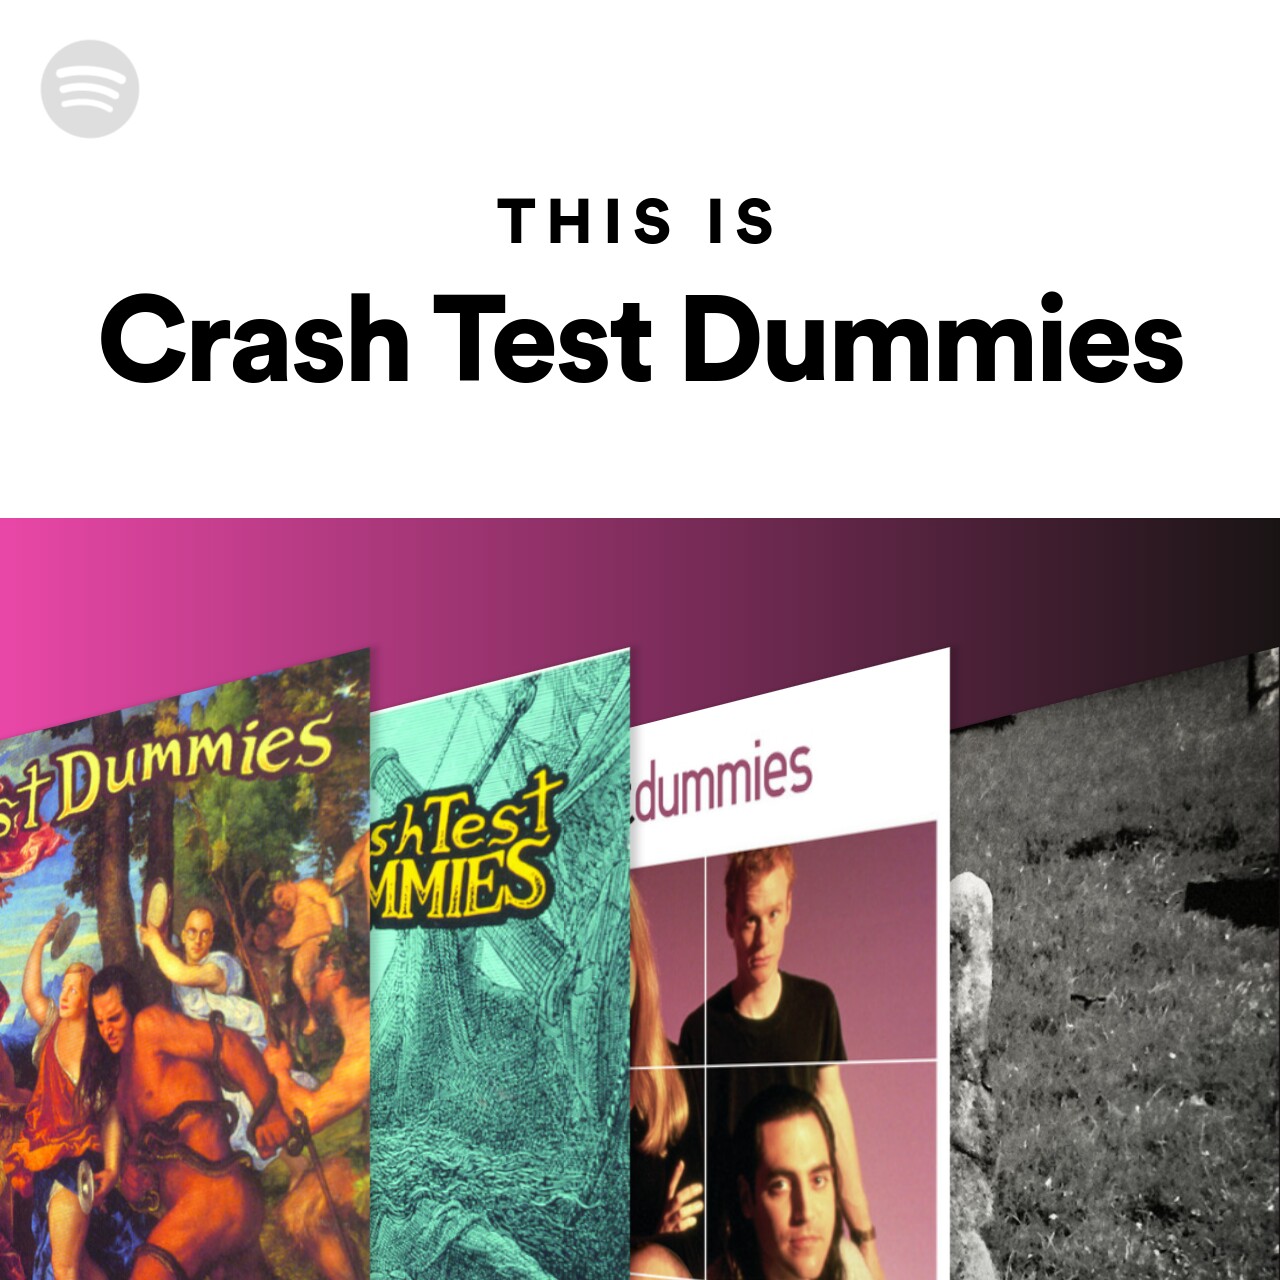 This is Crash Test Dummies